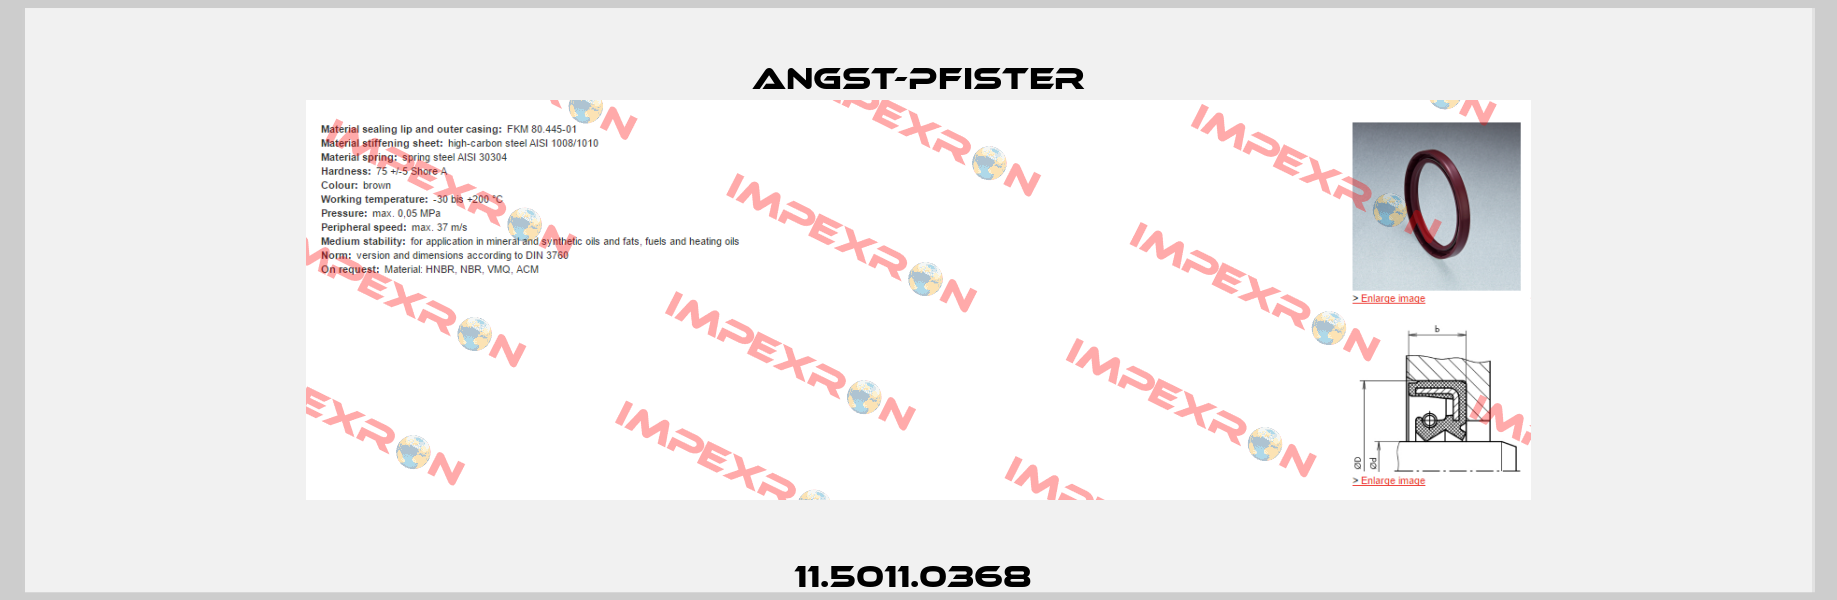 11.5011.0368  Angst-Pfister